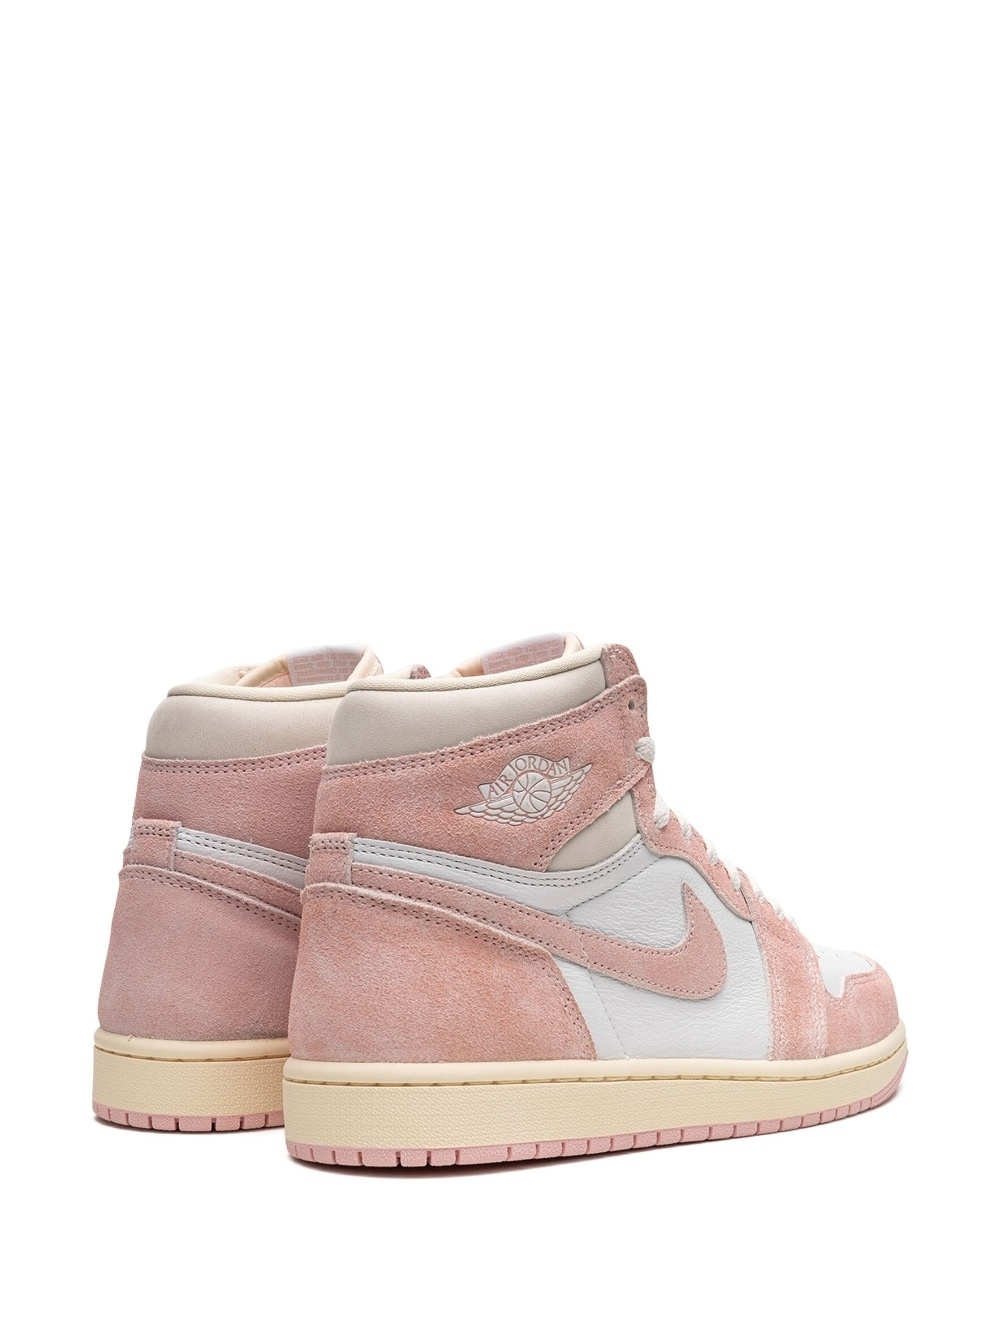 Air Jordan 1 "Washed Pink" sneakers - 3